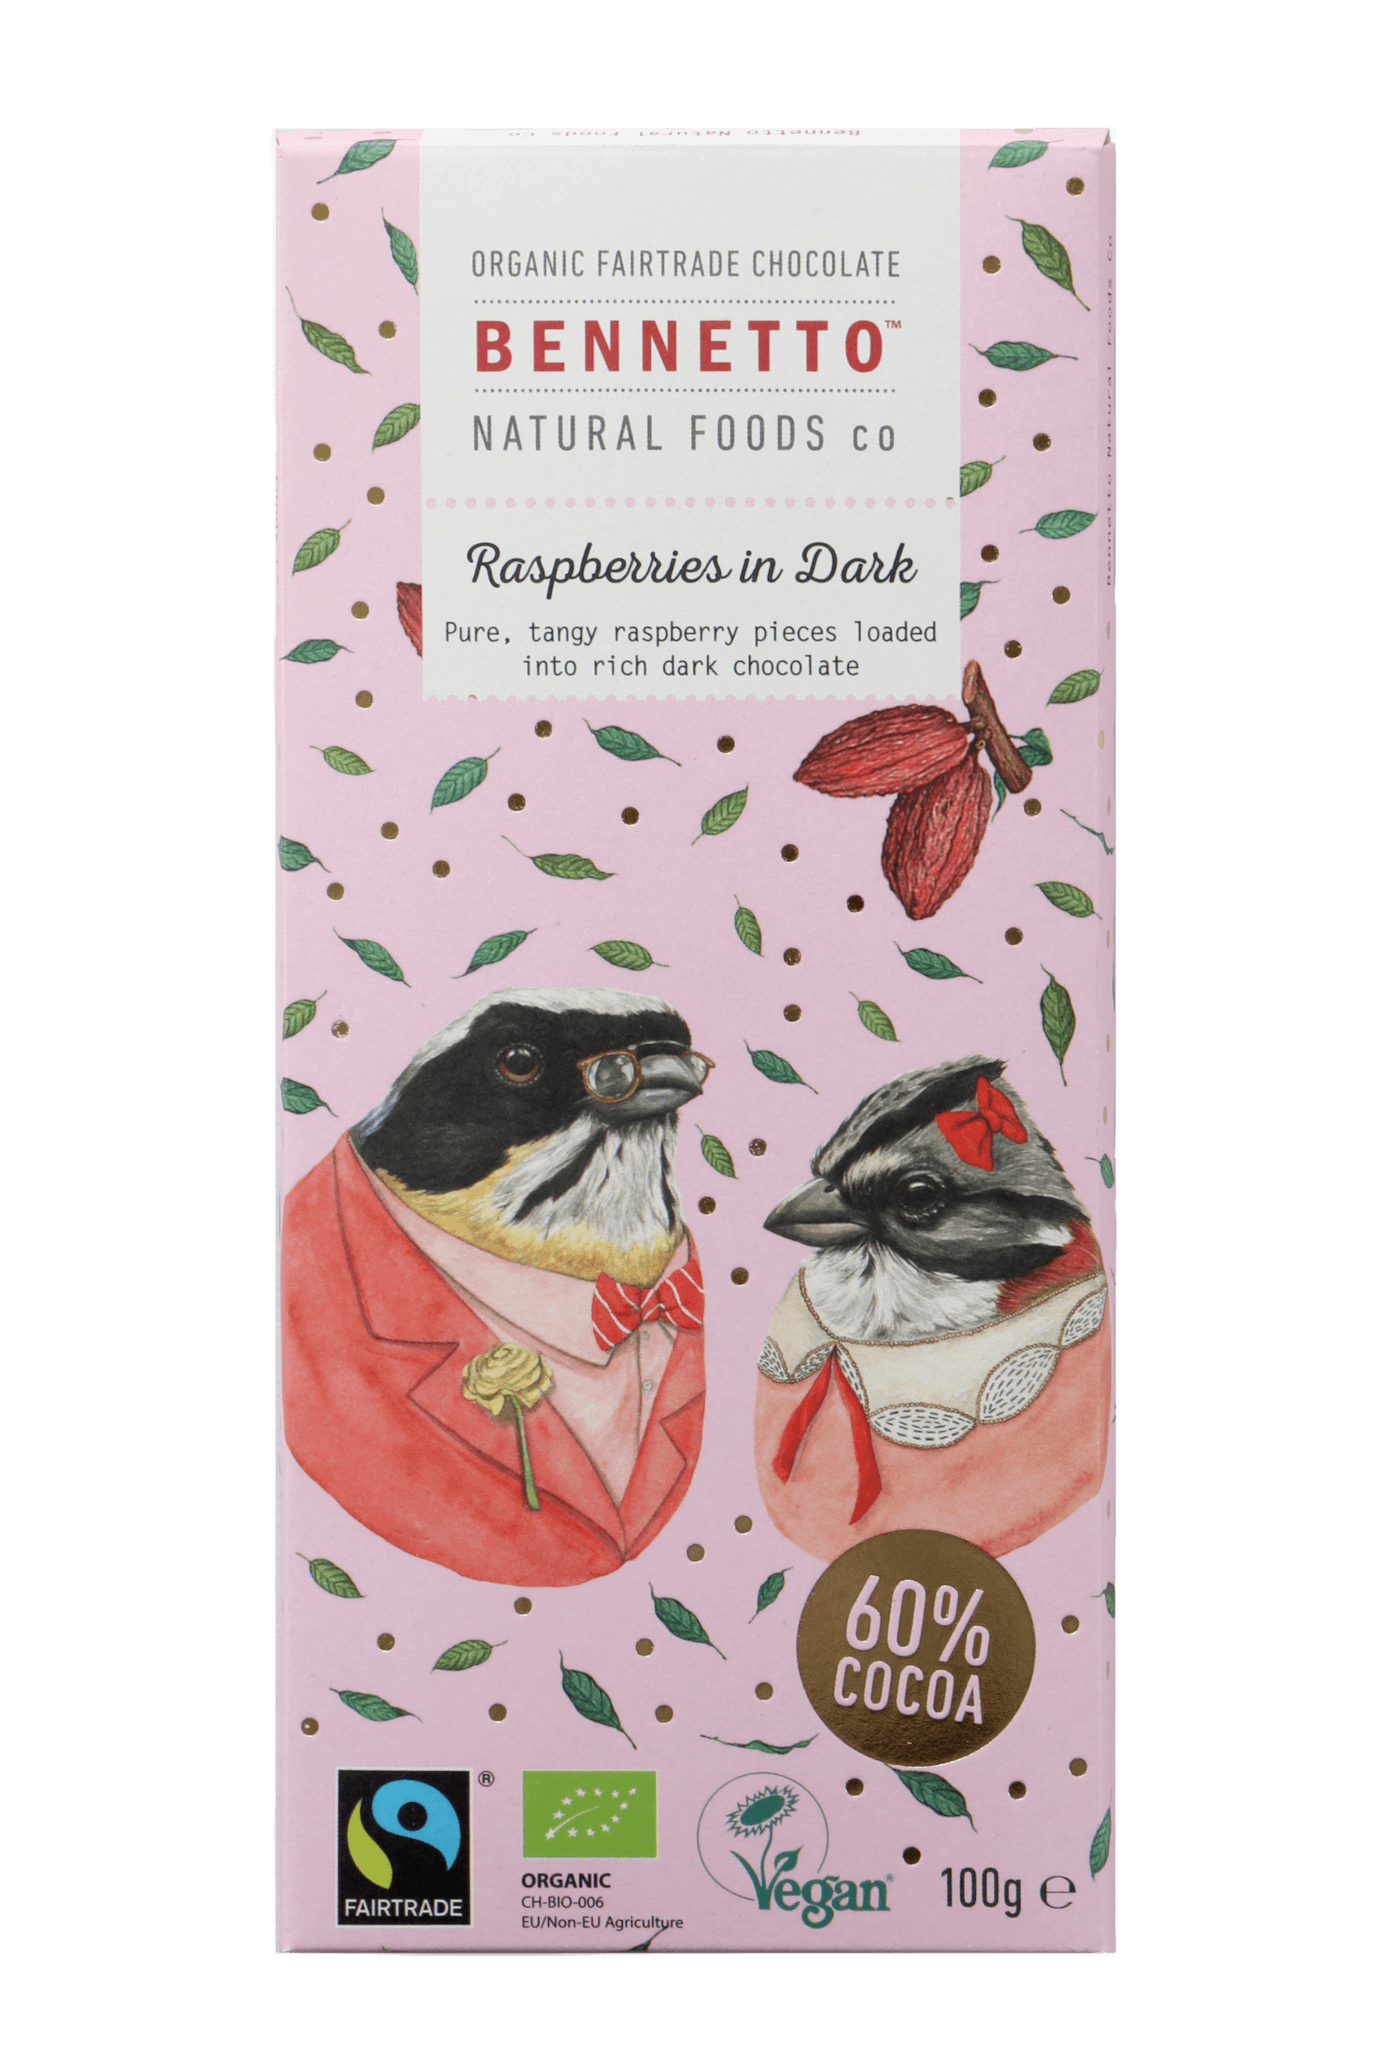 Bennetto Natural Foods co Raspberries In Dark 100G Chocolate Bar